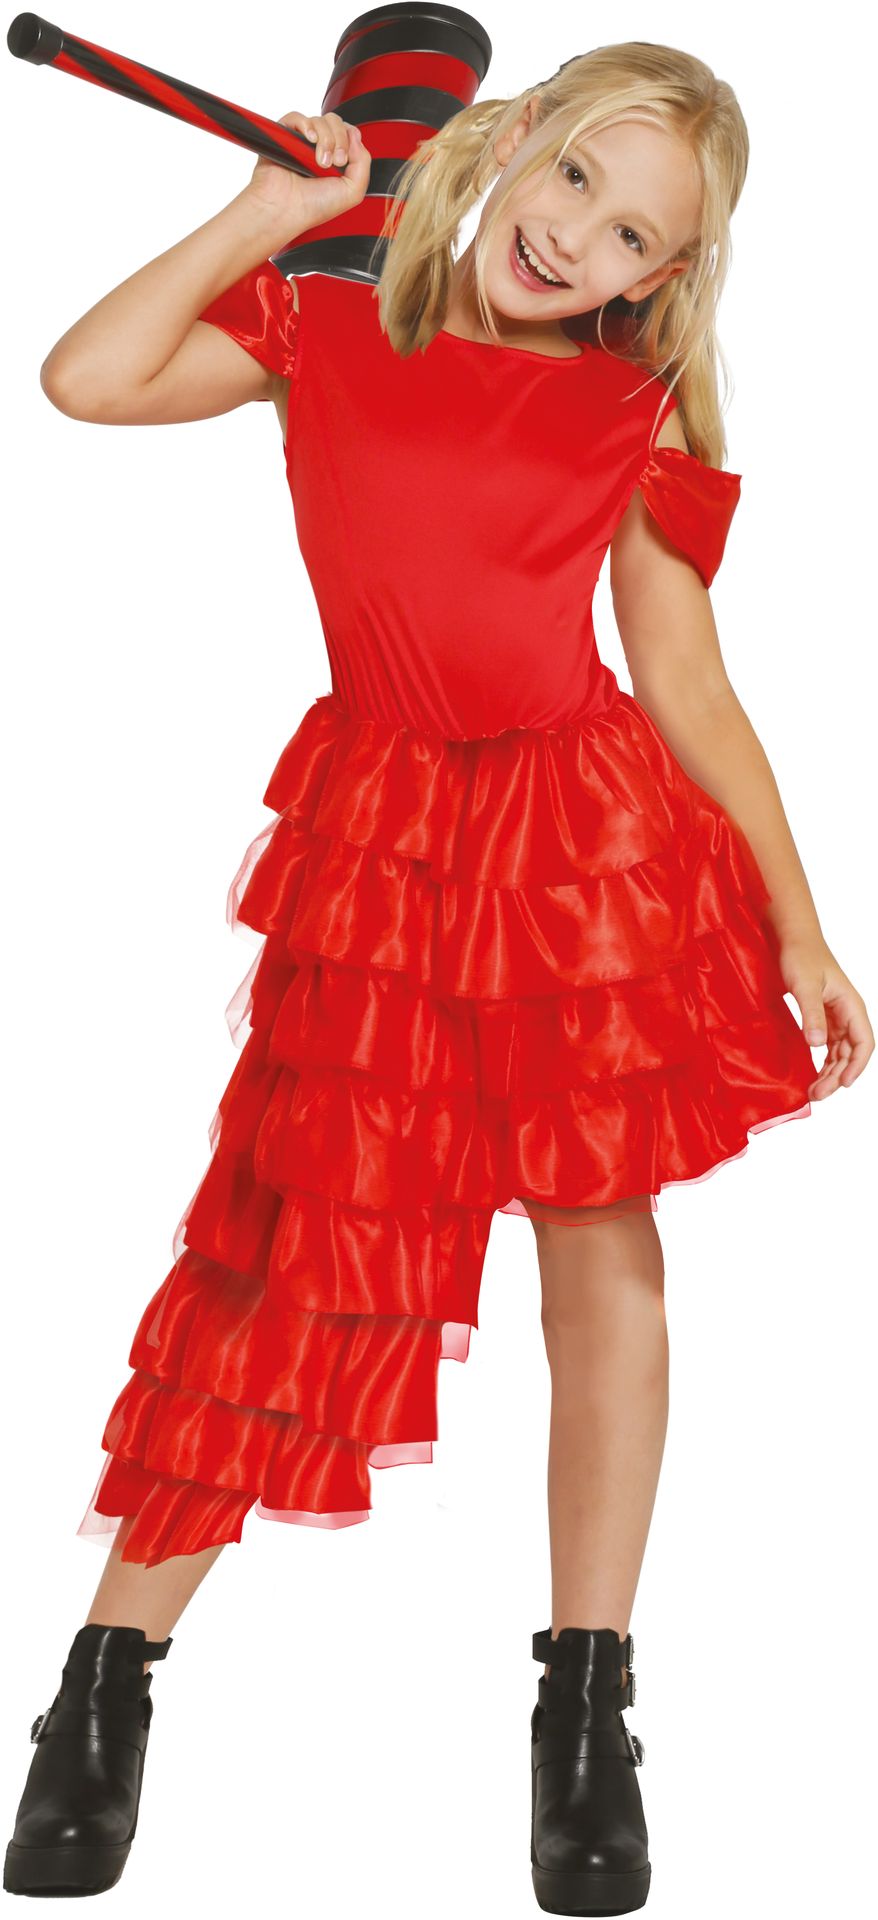 Crazy harley quinn jurk rood kind